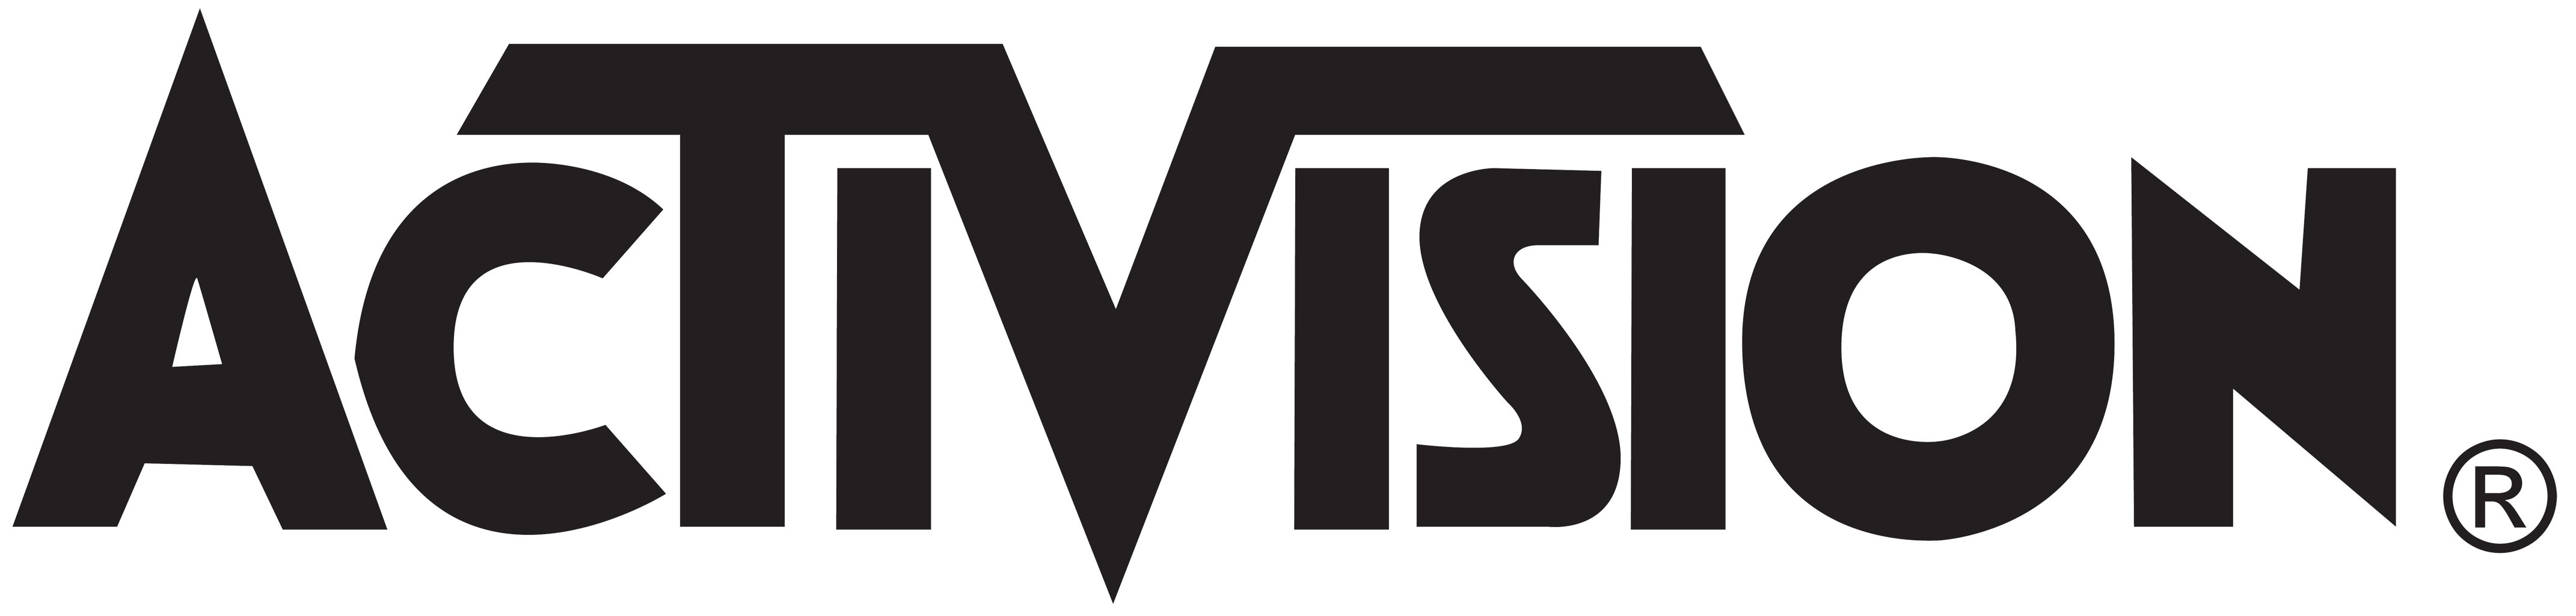 File:Activision logo.png